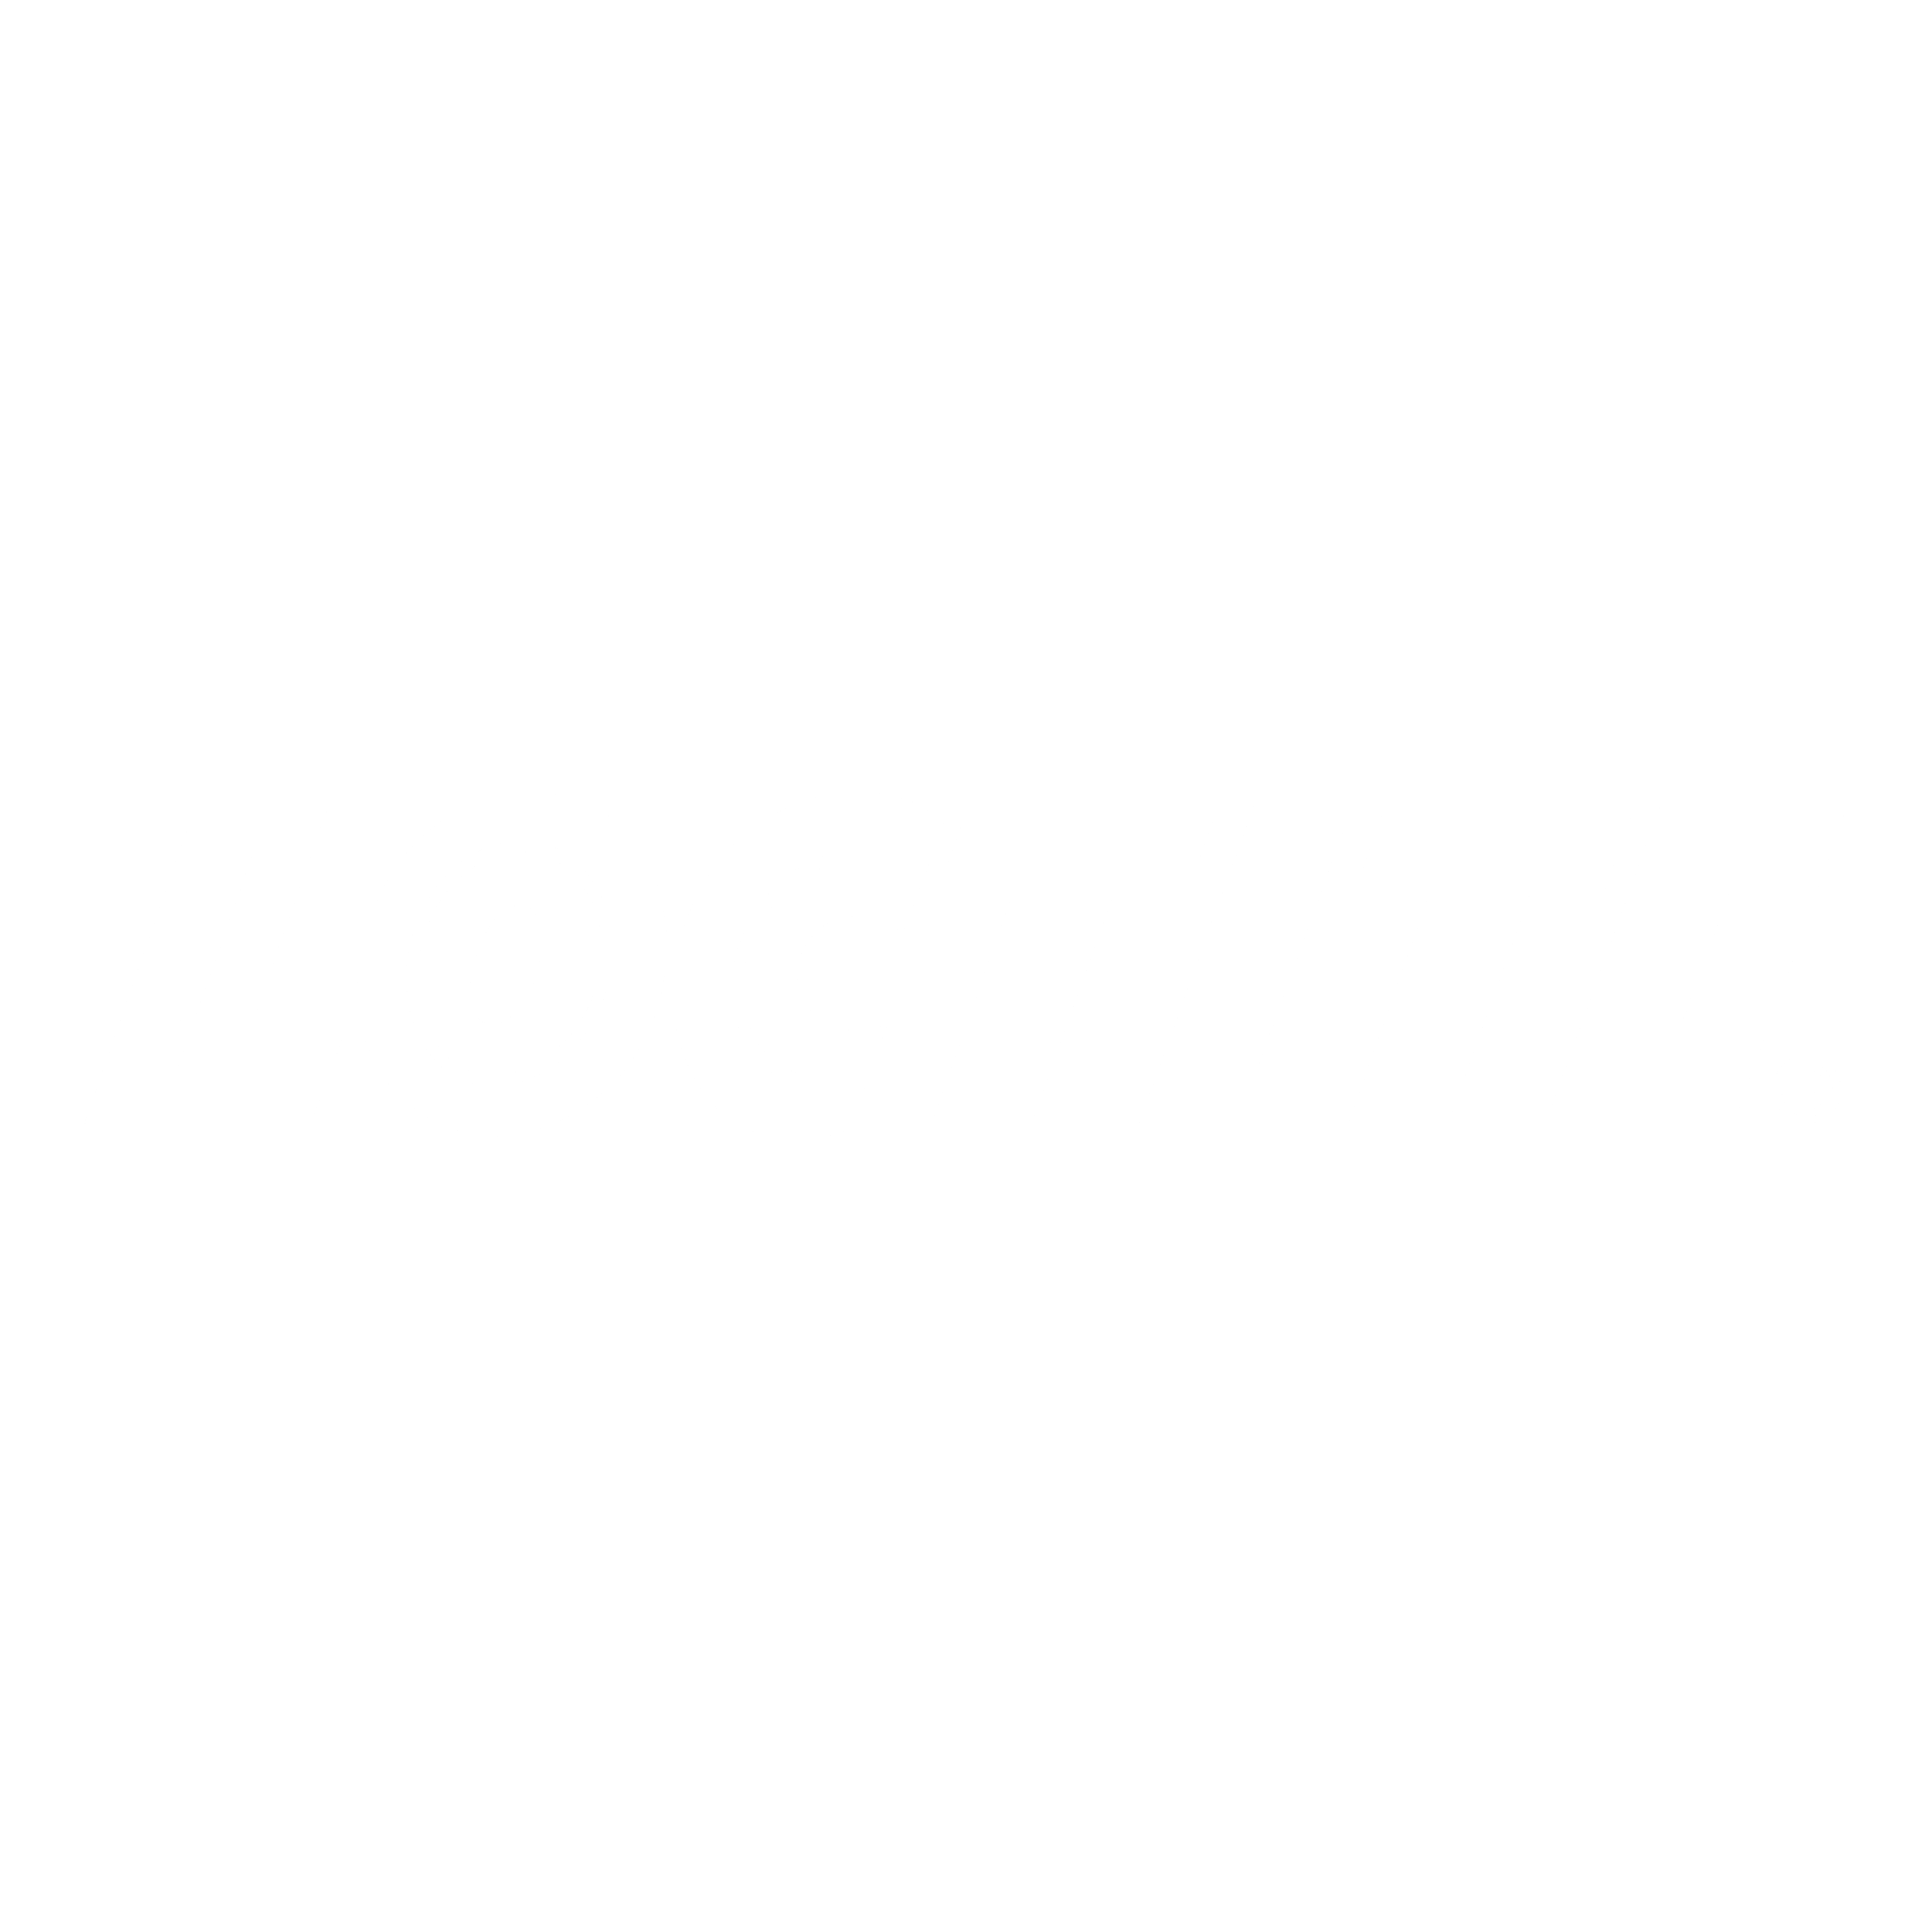 Loctite Logo - Loctite Logo PNG Transparent & SVG Vector - Freebie Supply